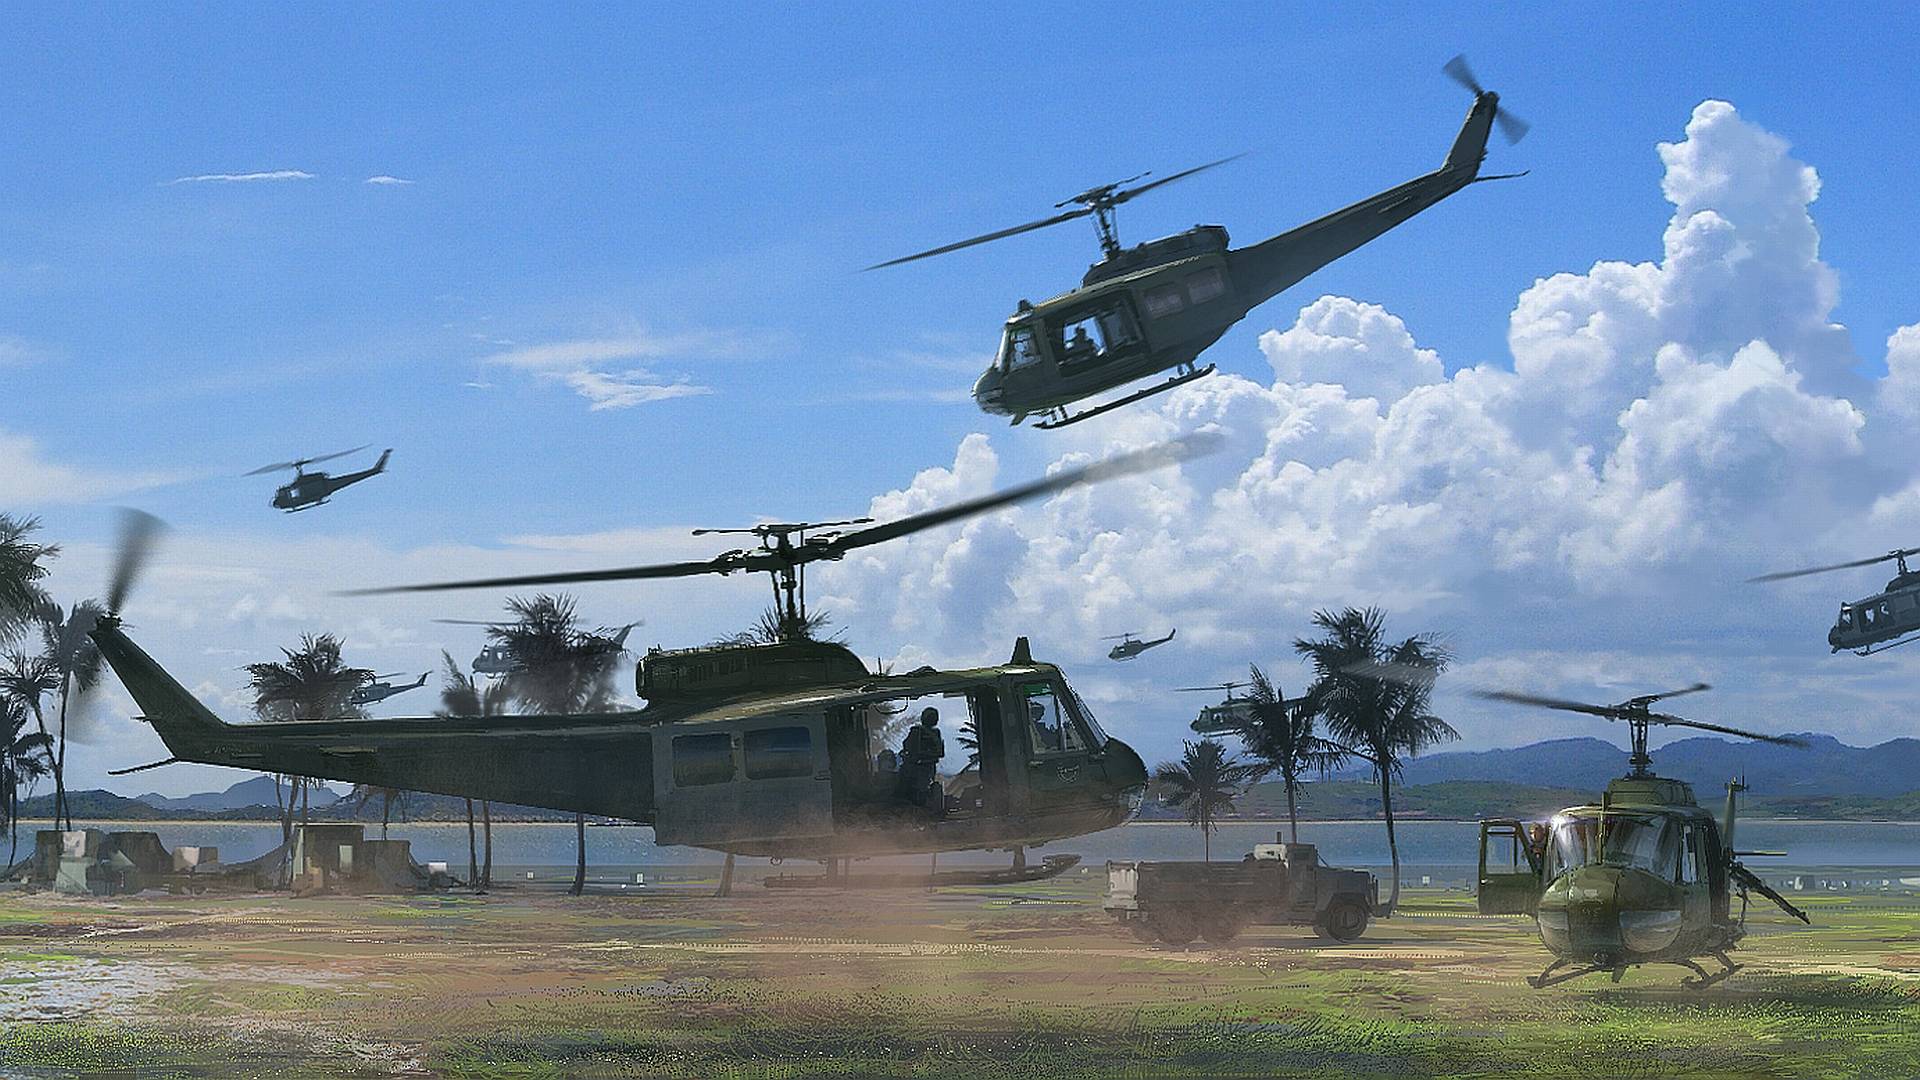 Fine Army Helicopter Image & Wallpaper Basilio Hemphill